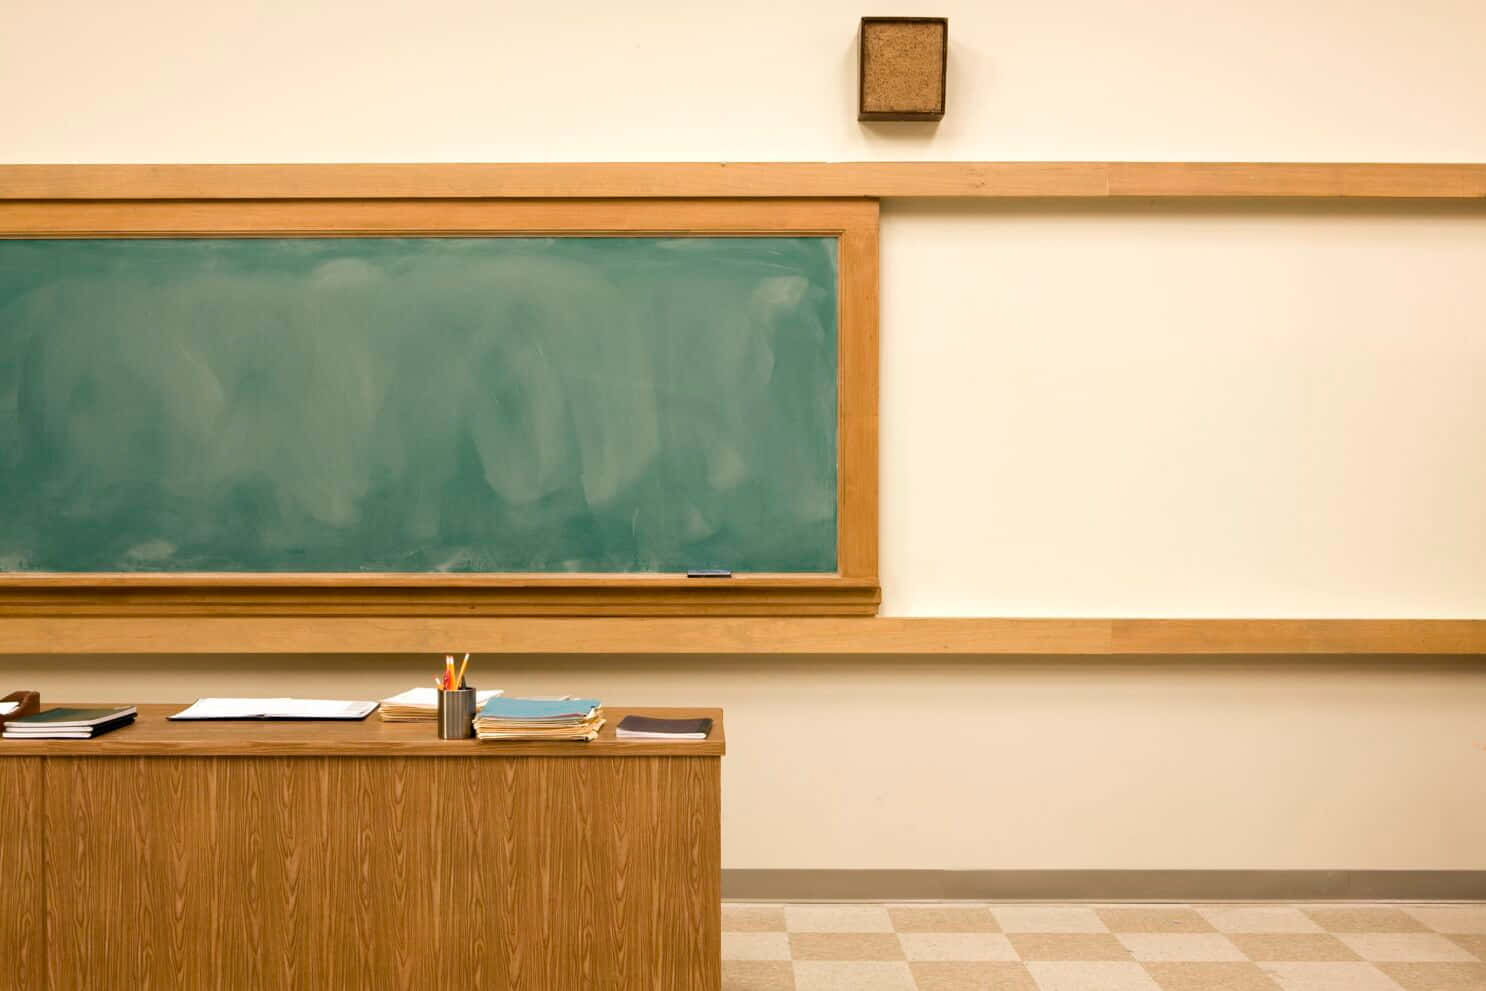 A Blackboard In A Classroom